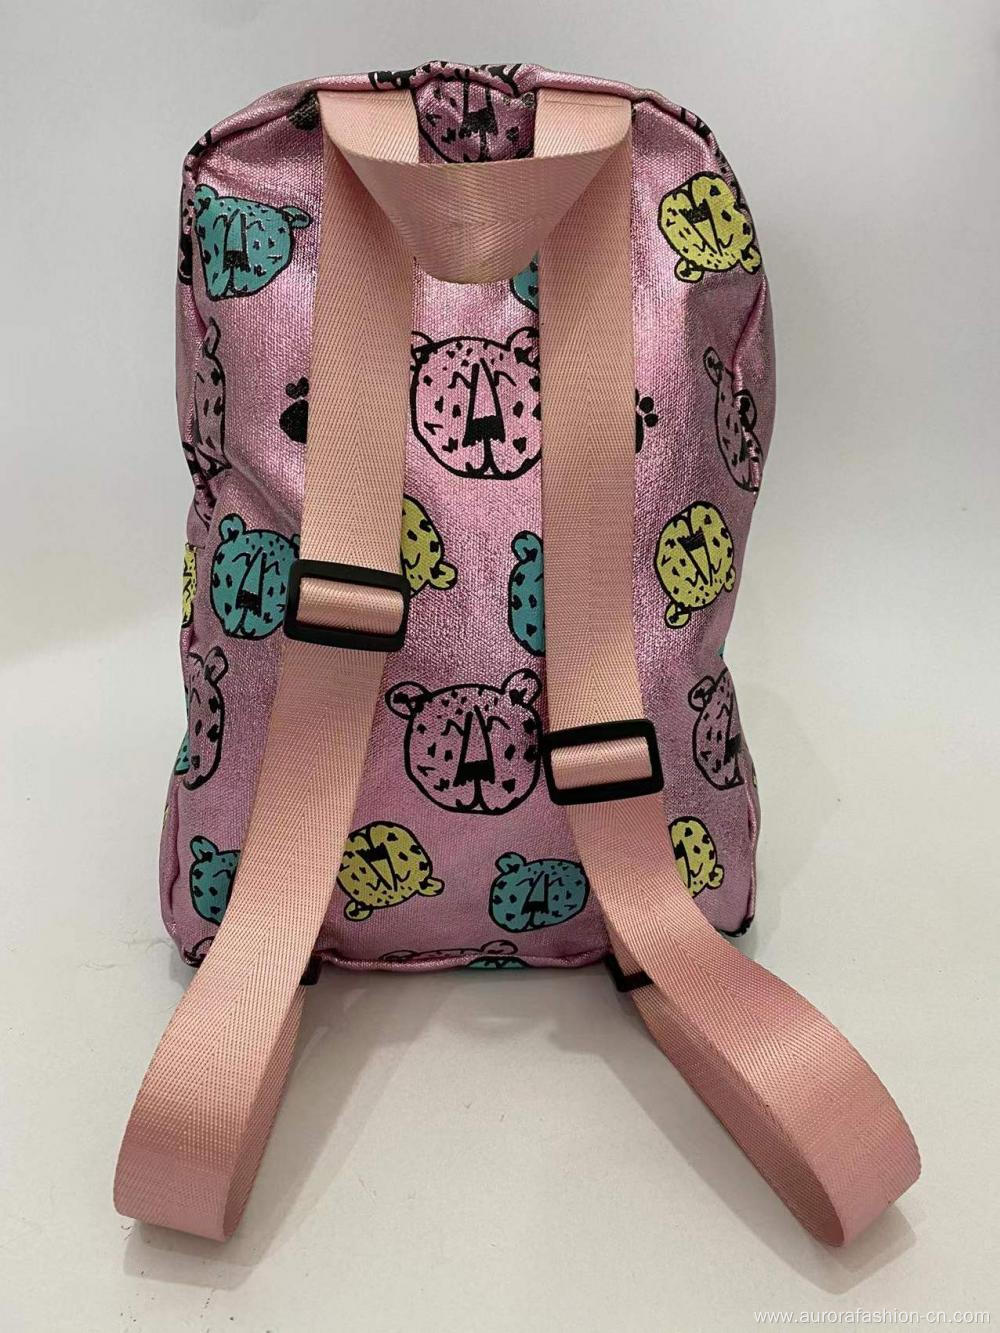 Pink Backpacks for Little Kids or Girls